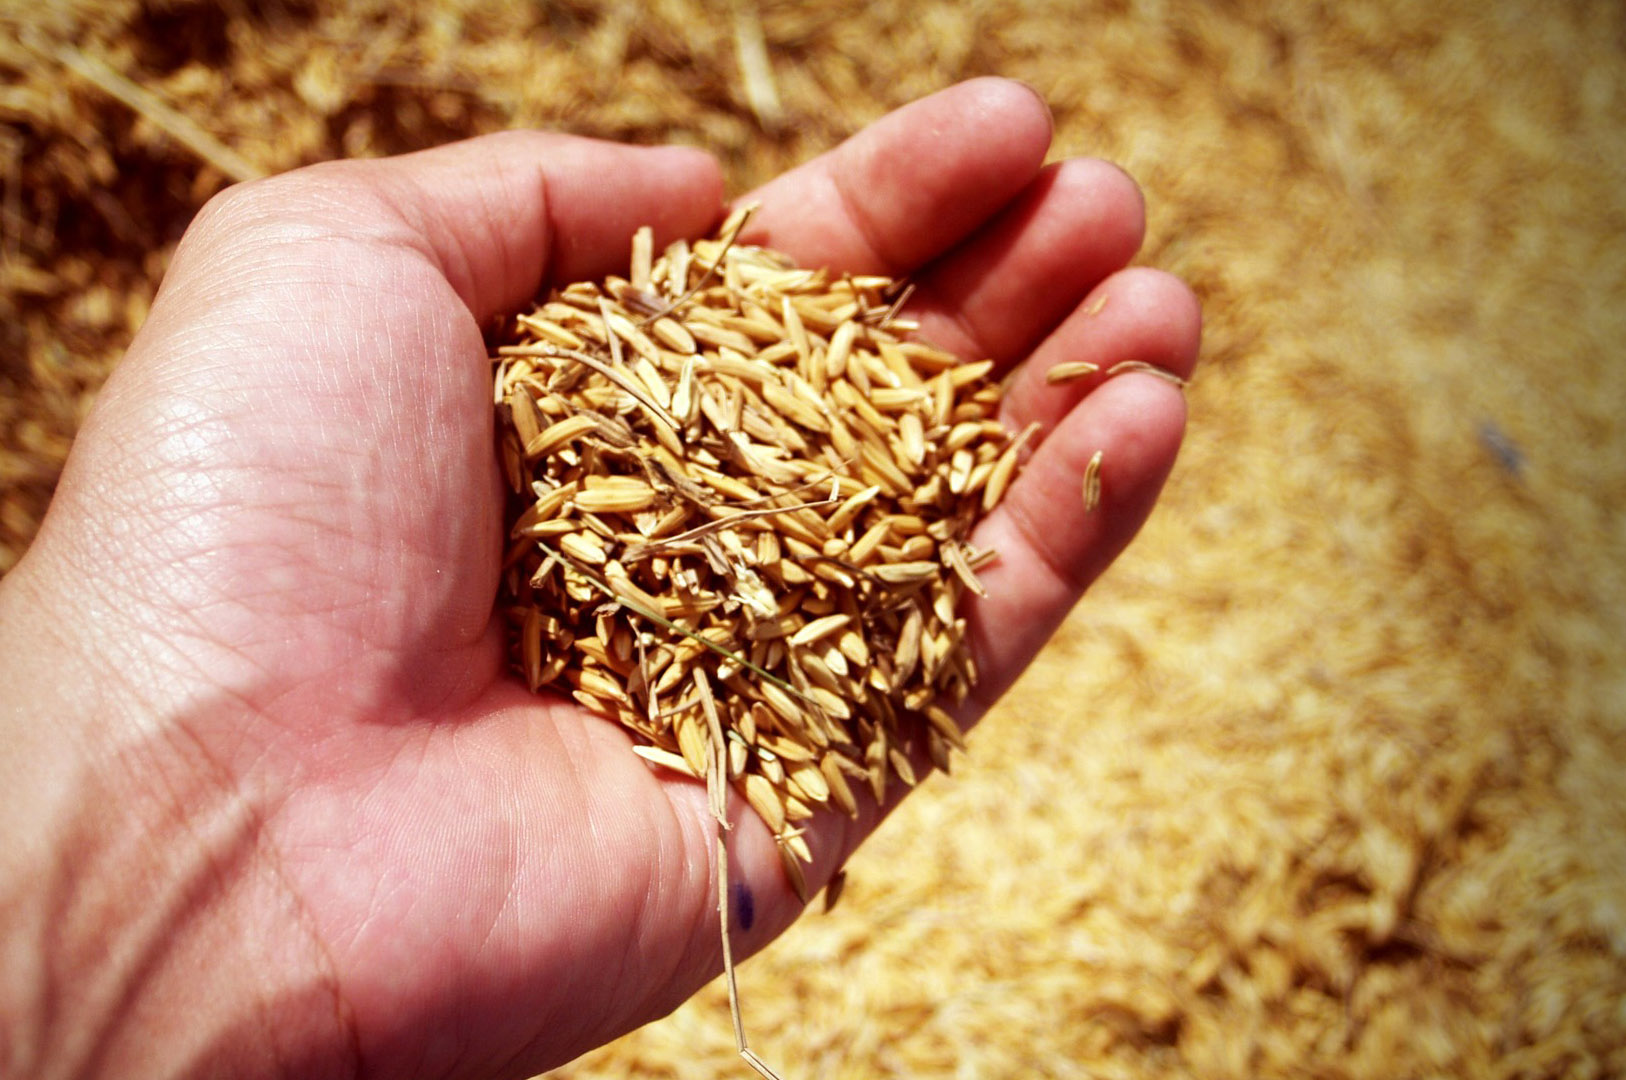 Empresa chilena busca generar energías renovables a partir de cáscaras de arroz